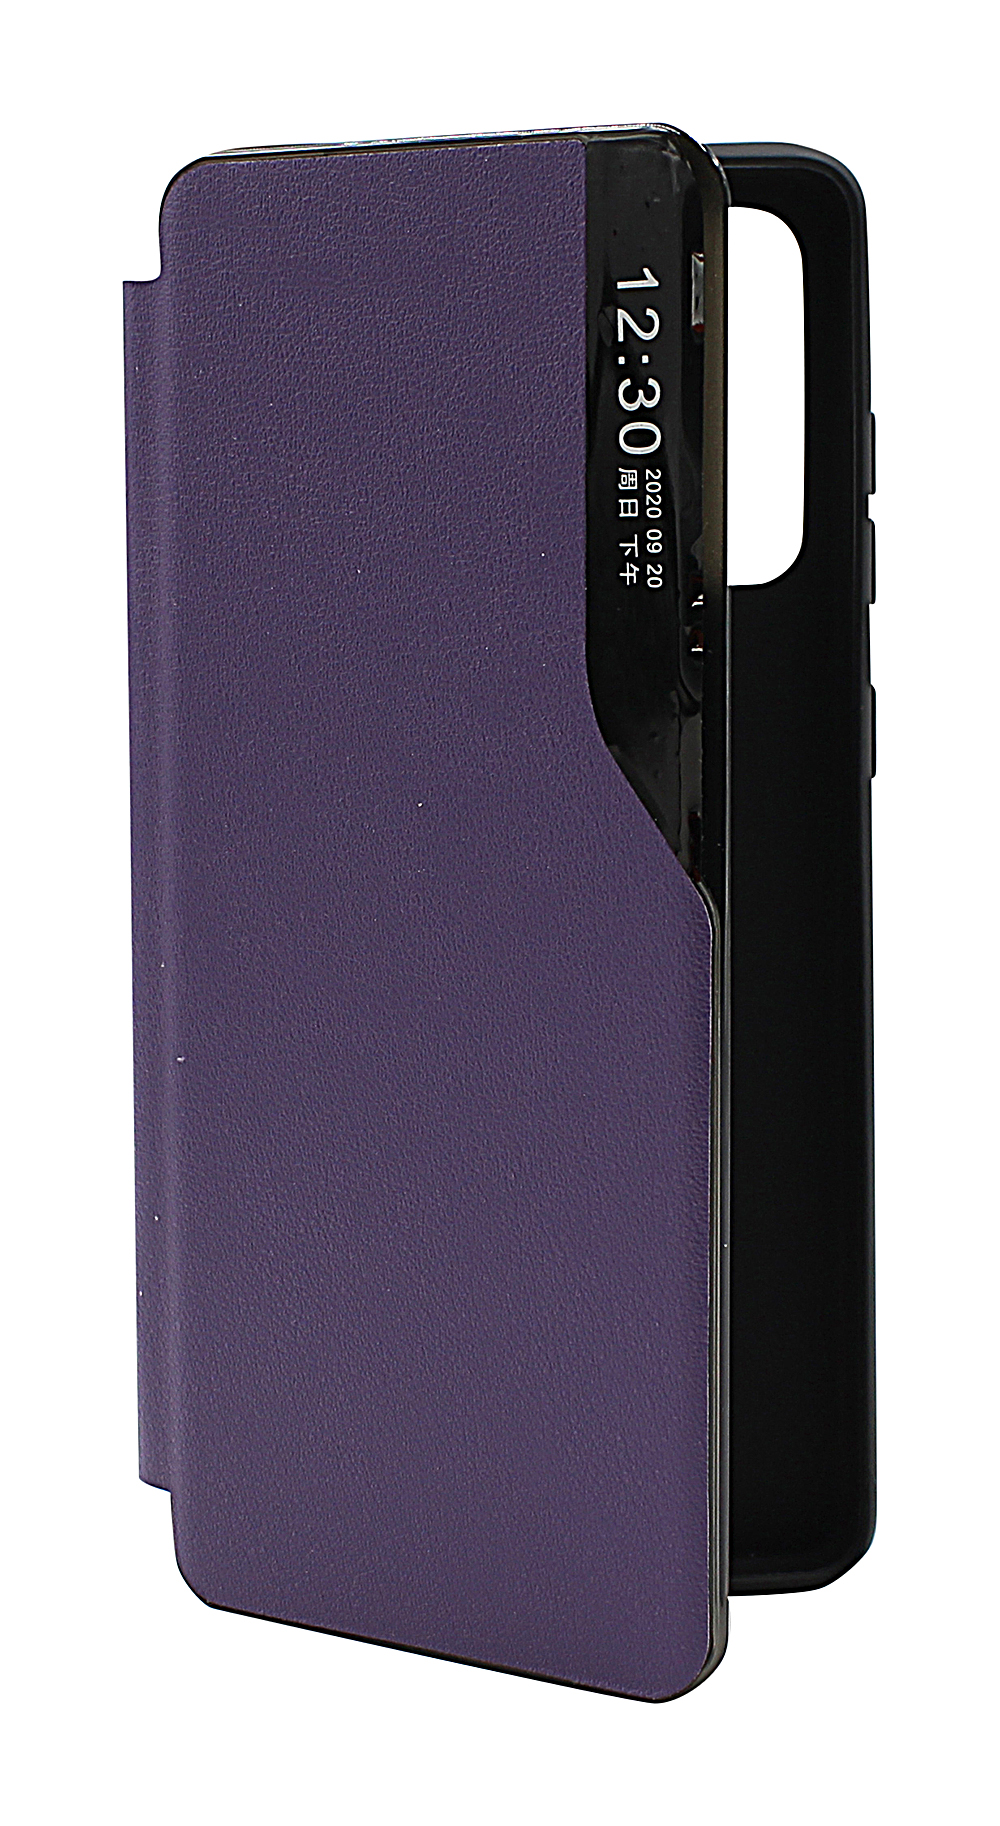 Smart Flip Cover Samsung Galaxy A72 (SM-A725F/DS)